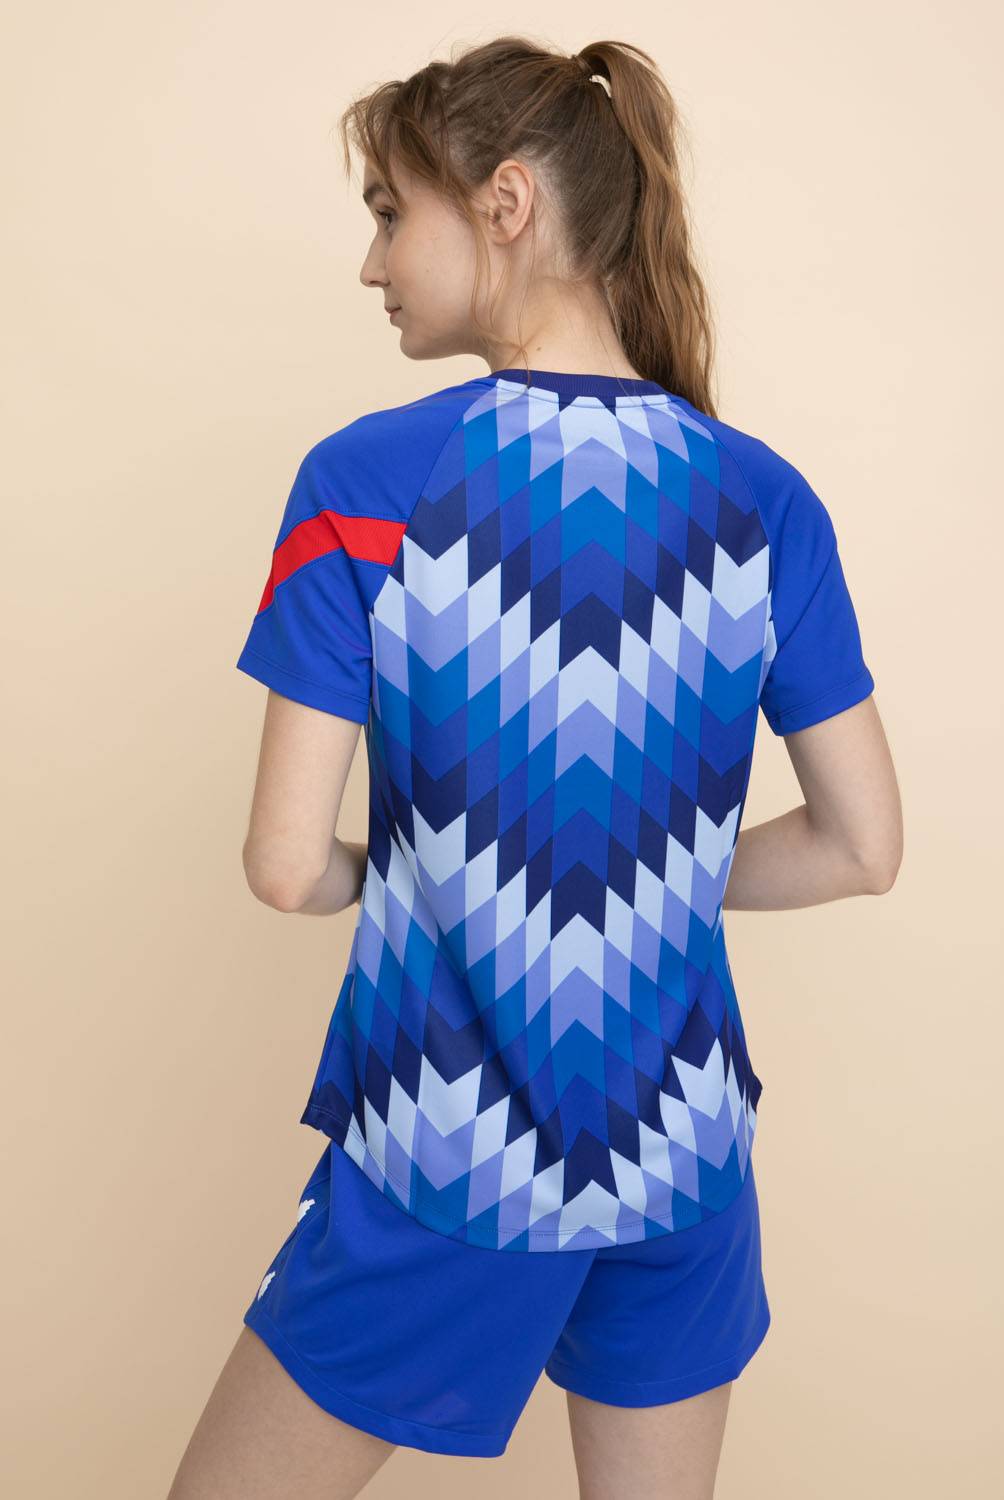 NIKE - Camiseta Chile Mujer Fútbol Prematch